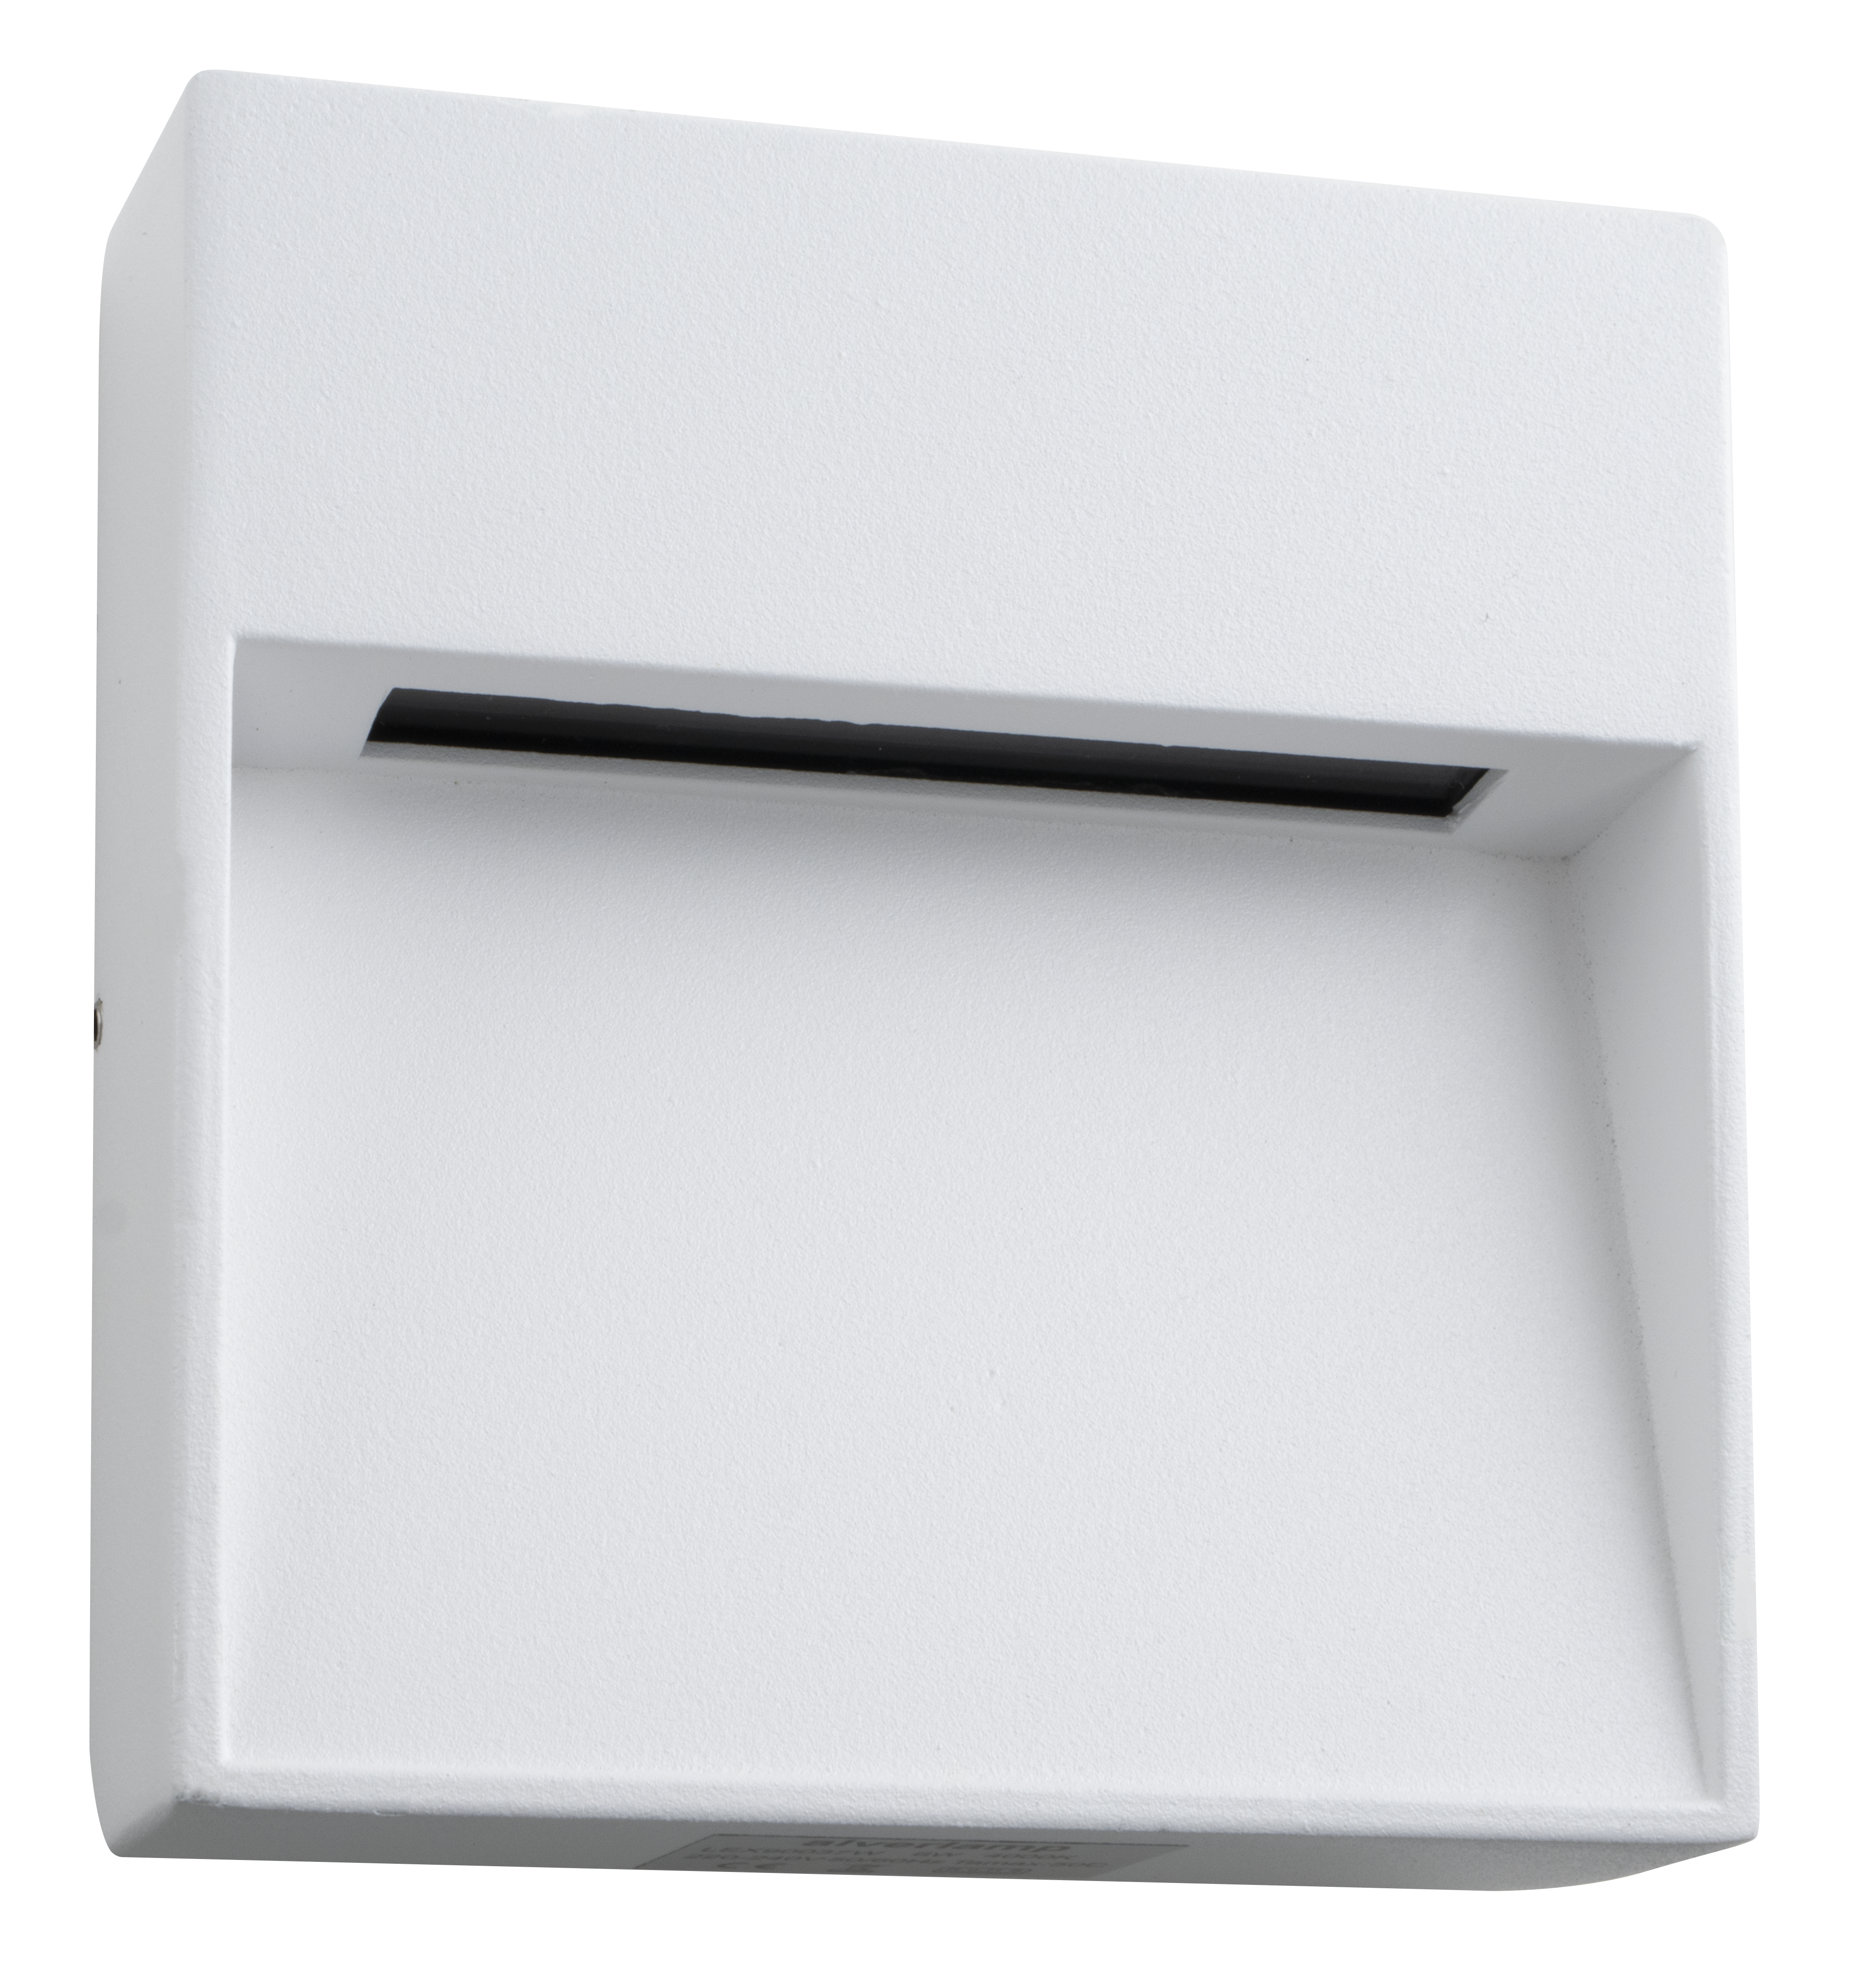 Foco empotrable de superficie cuadrado lex90036 led blanco 6w blanco neutro